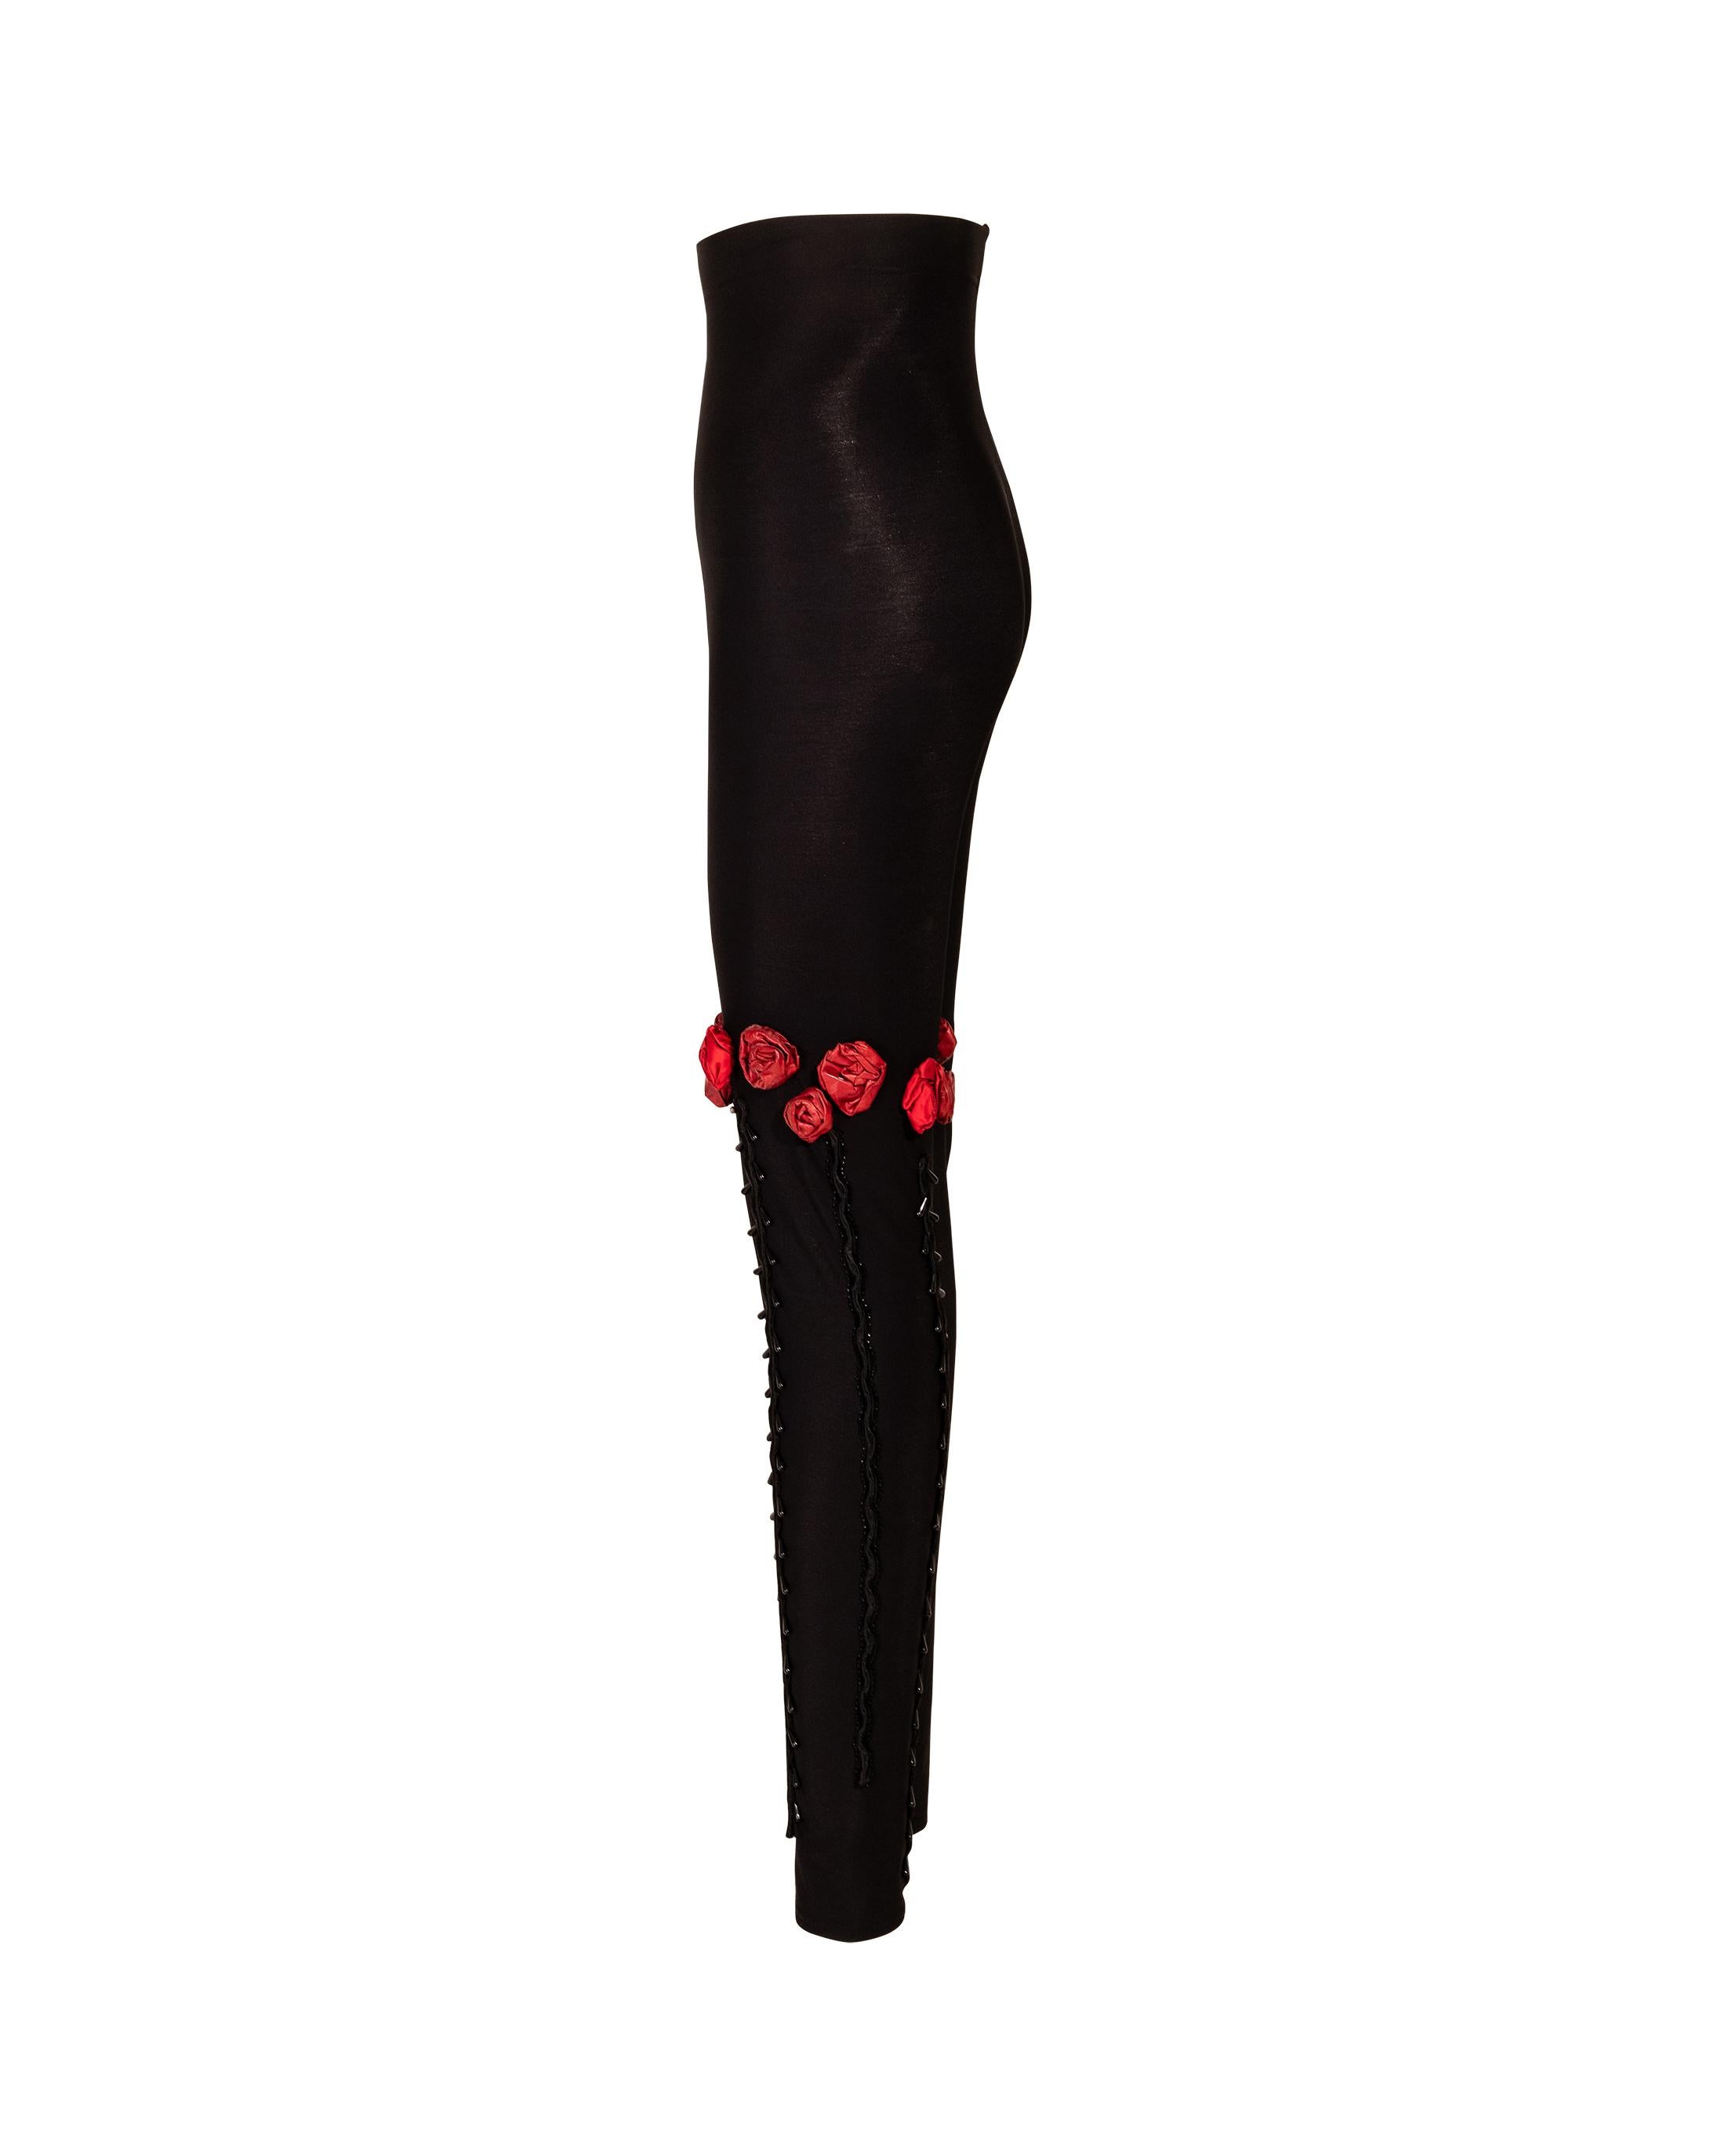 A/W 1992 Chantal Thomass Black Mini Dress Adorned with Roses 3